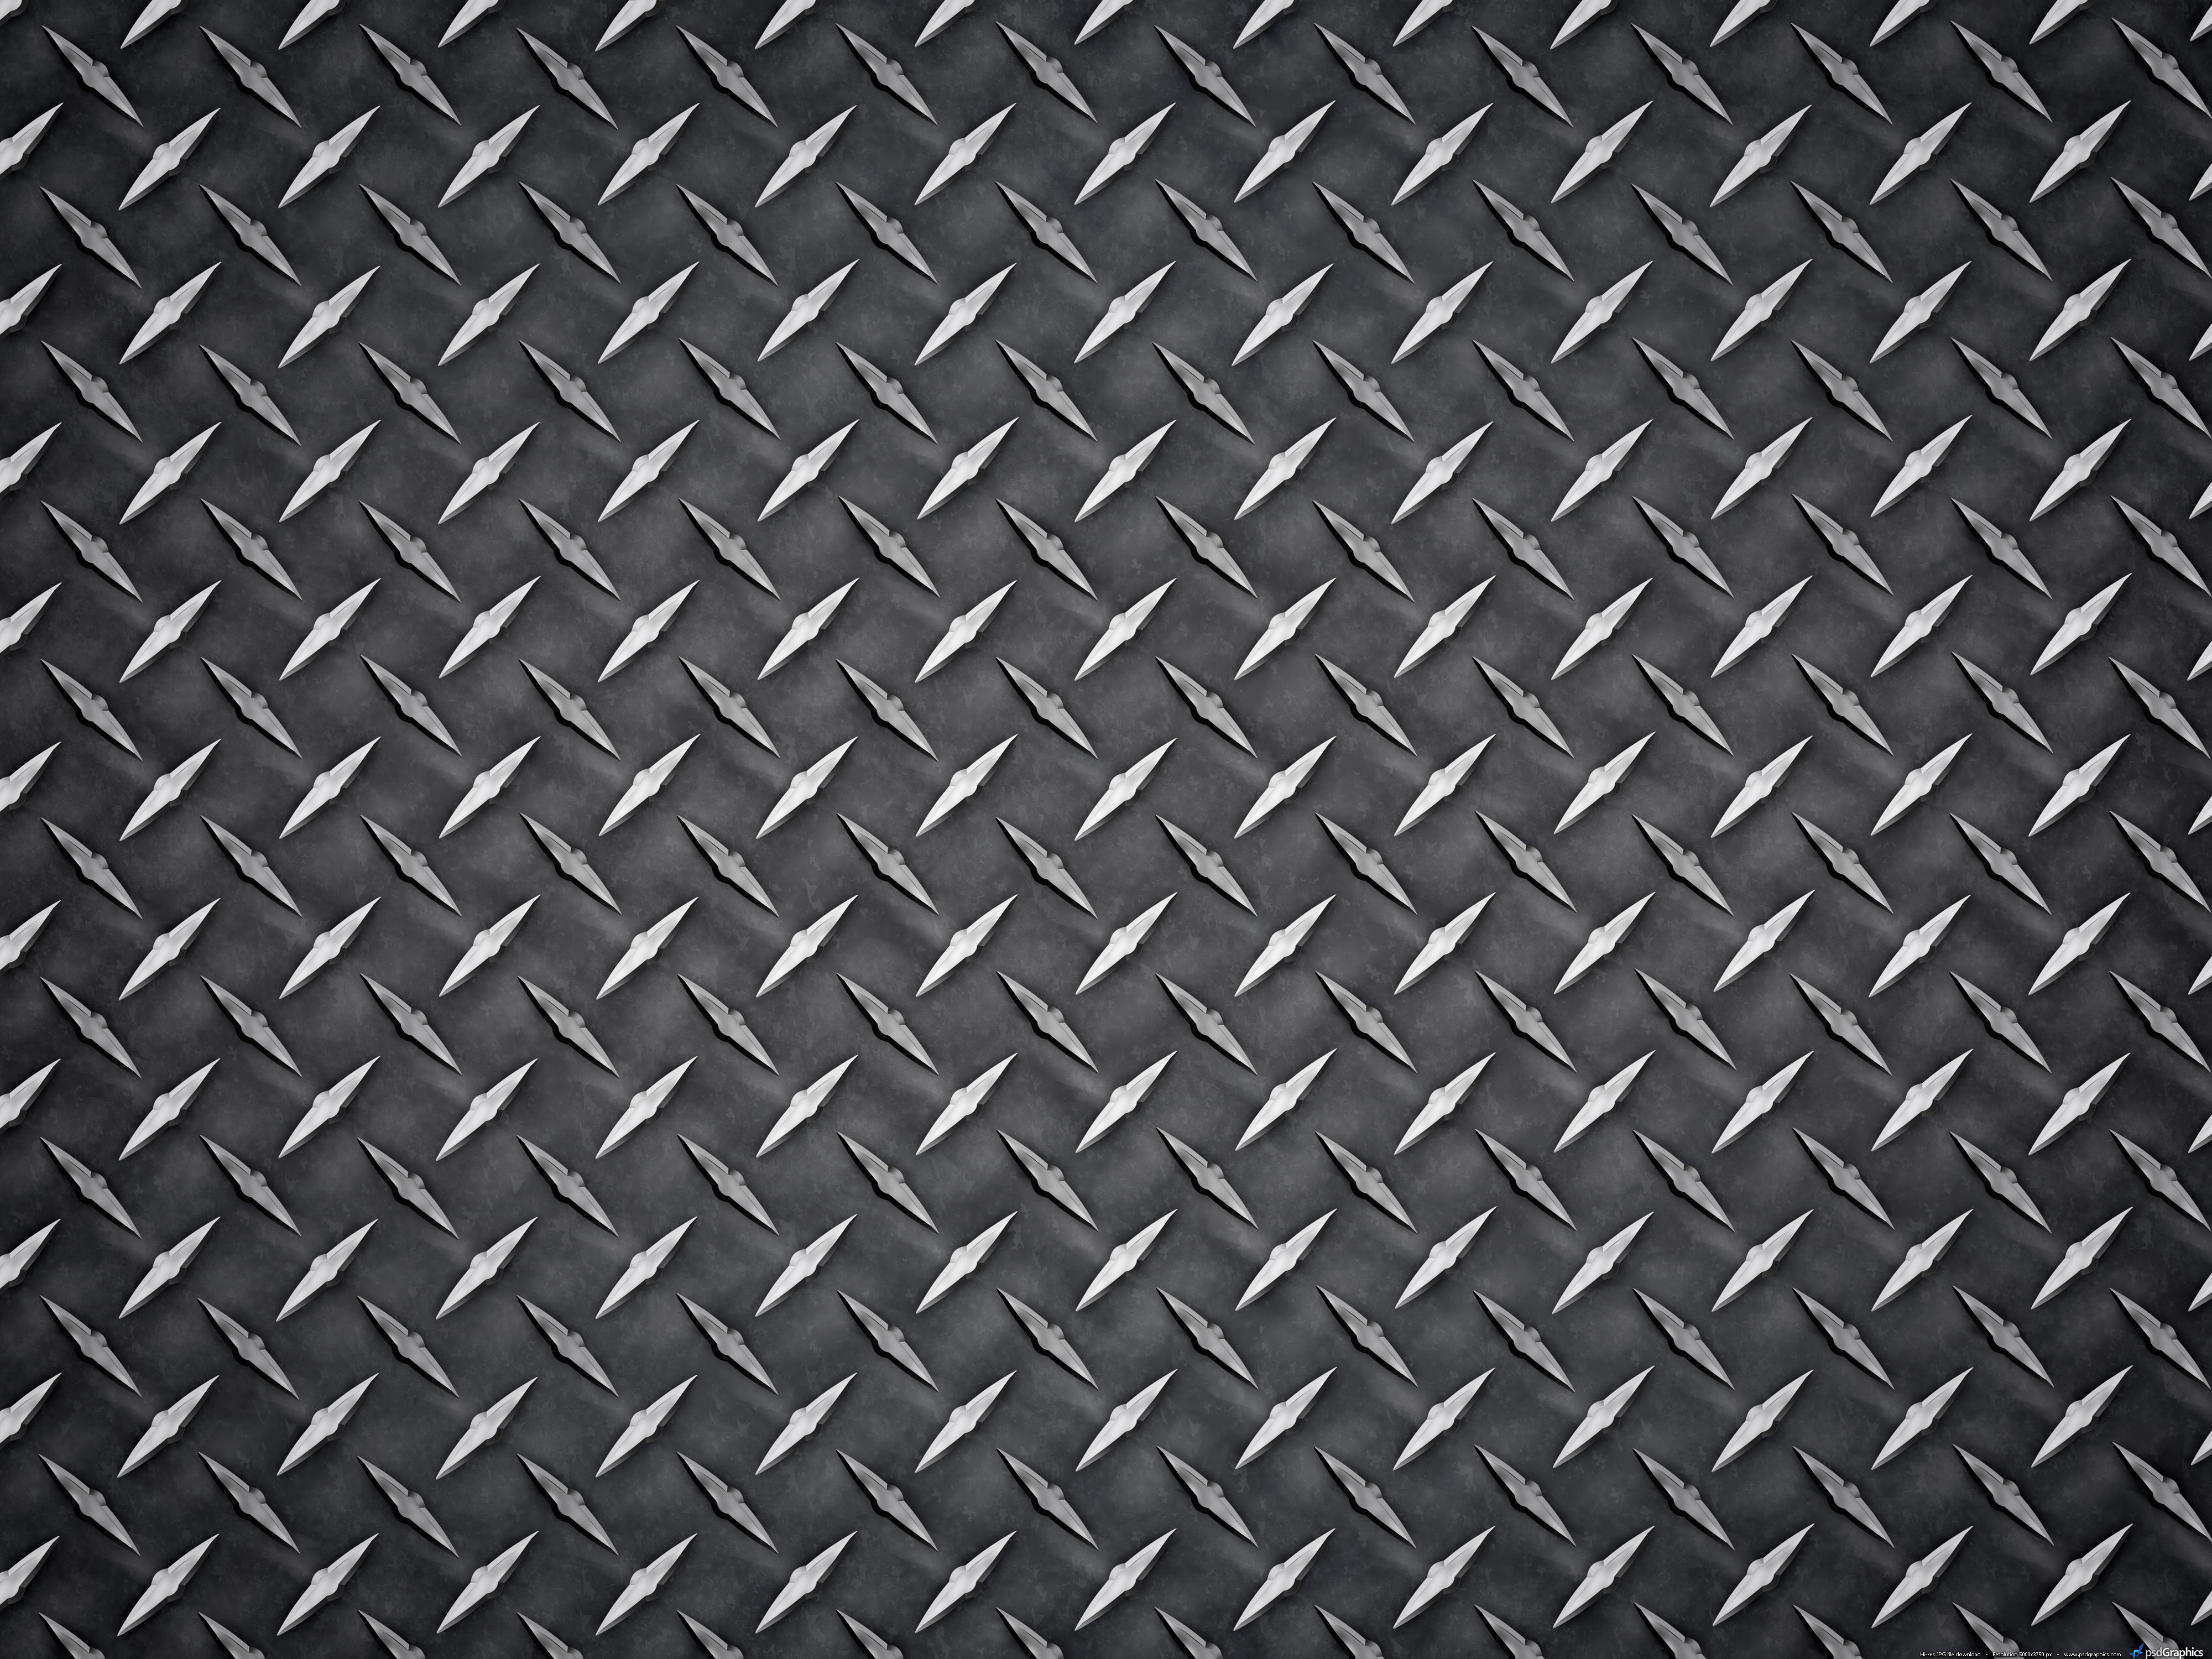 Sheet Texture Metal Grid Stainless Steel Mesh Background